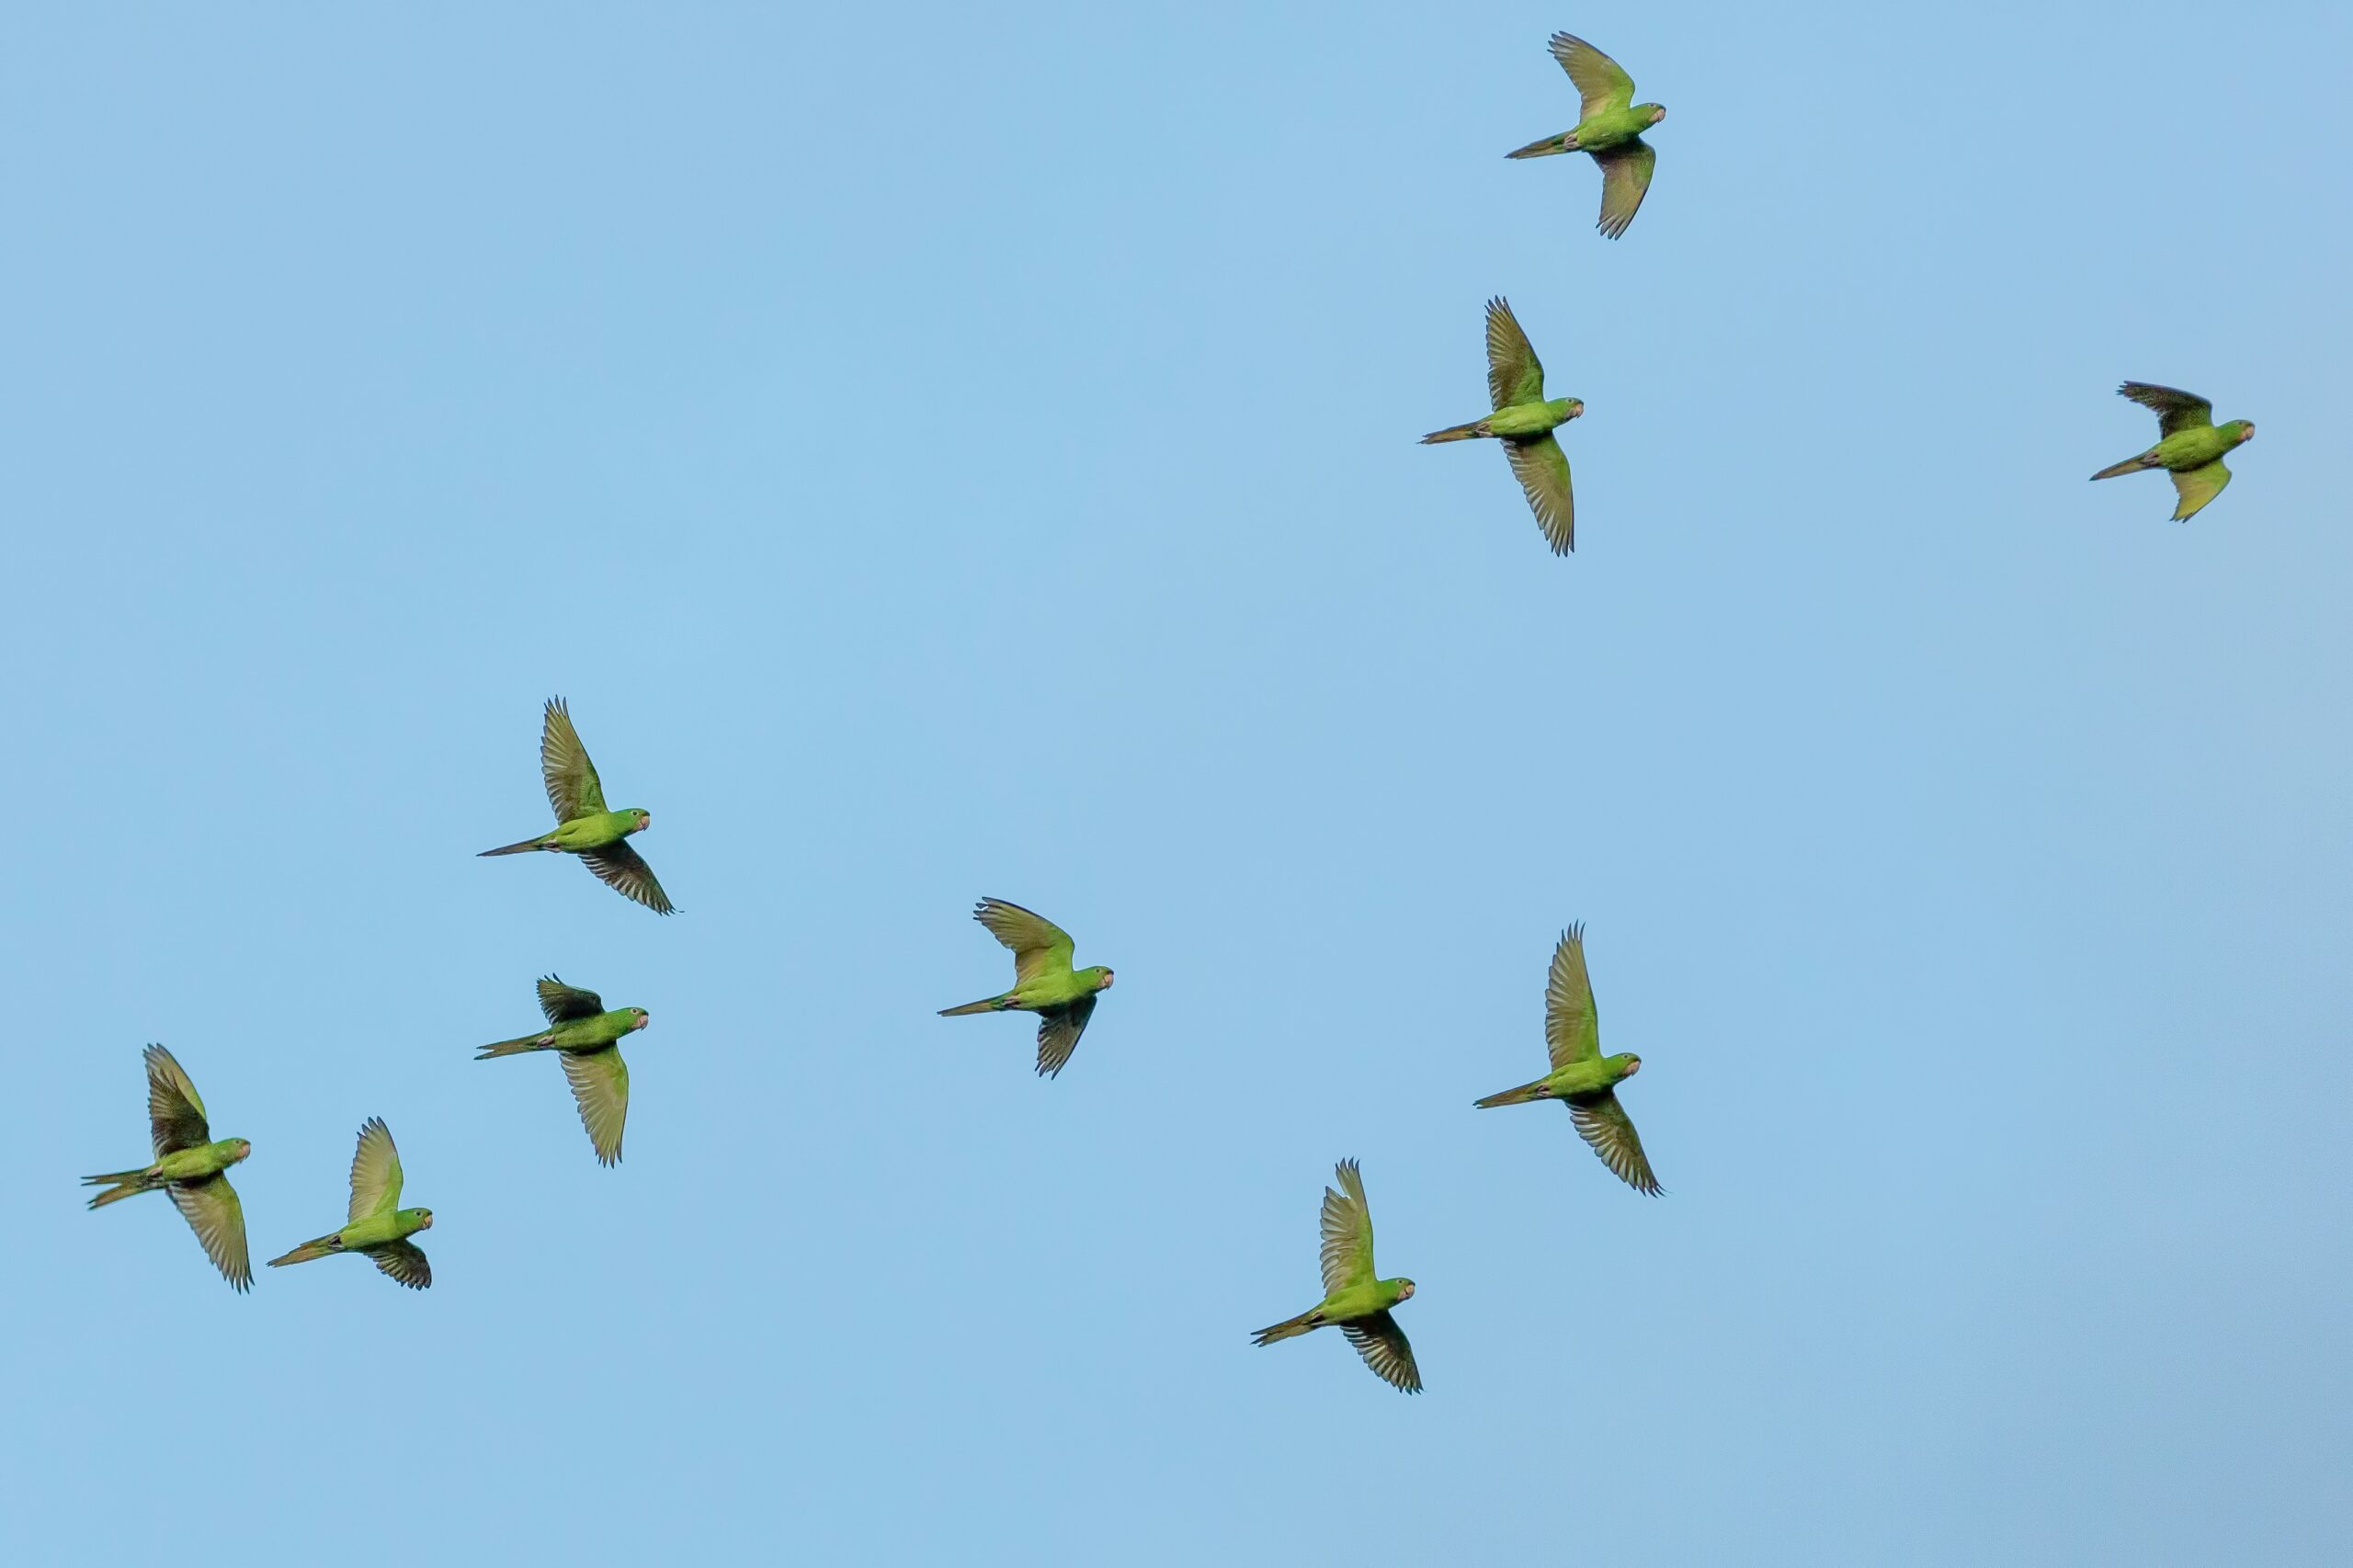 Green birds of paradise fly against a blue sky